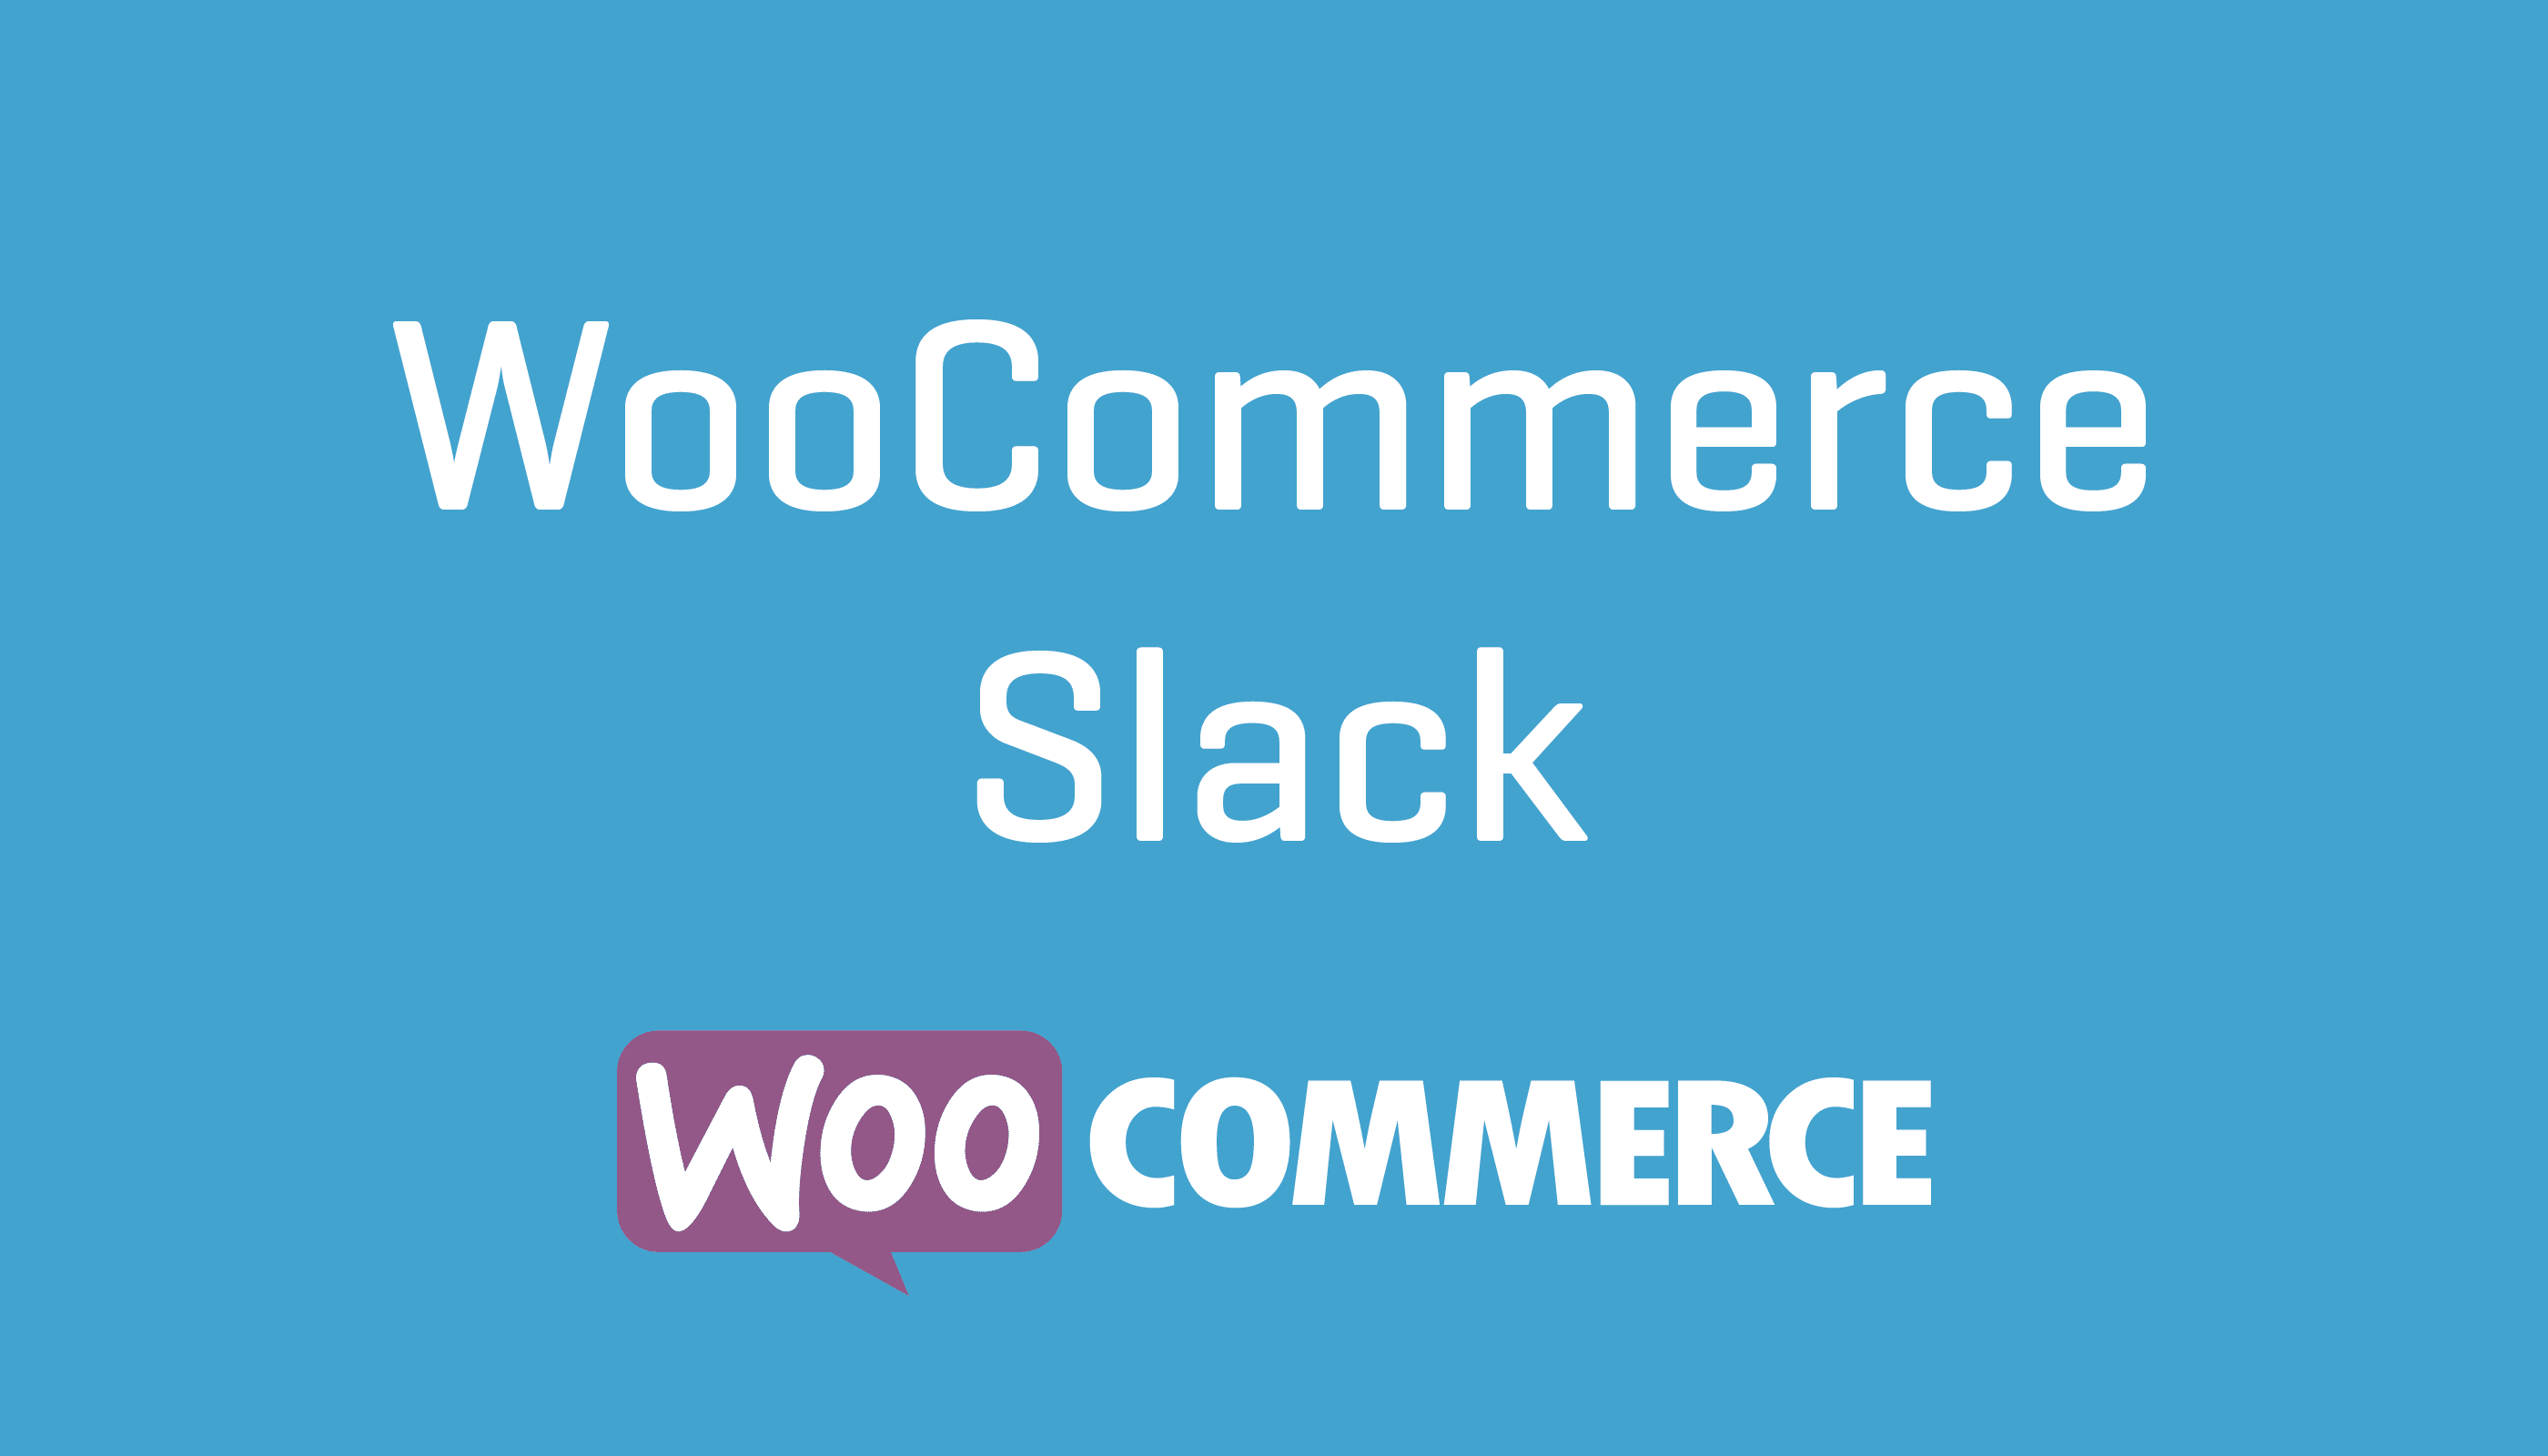 WooCommerce Slack